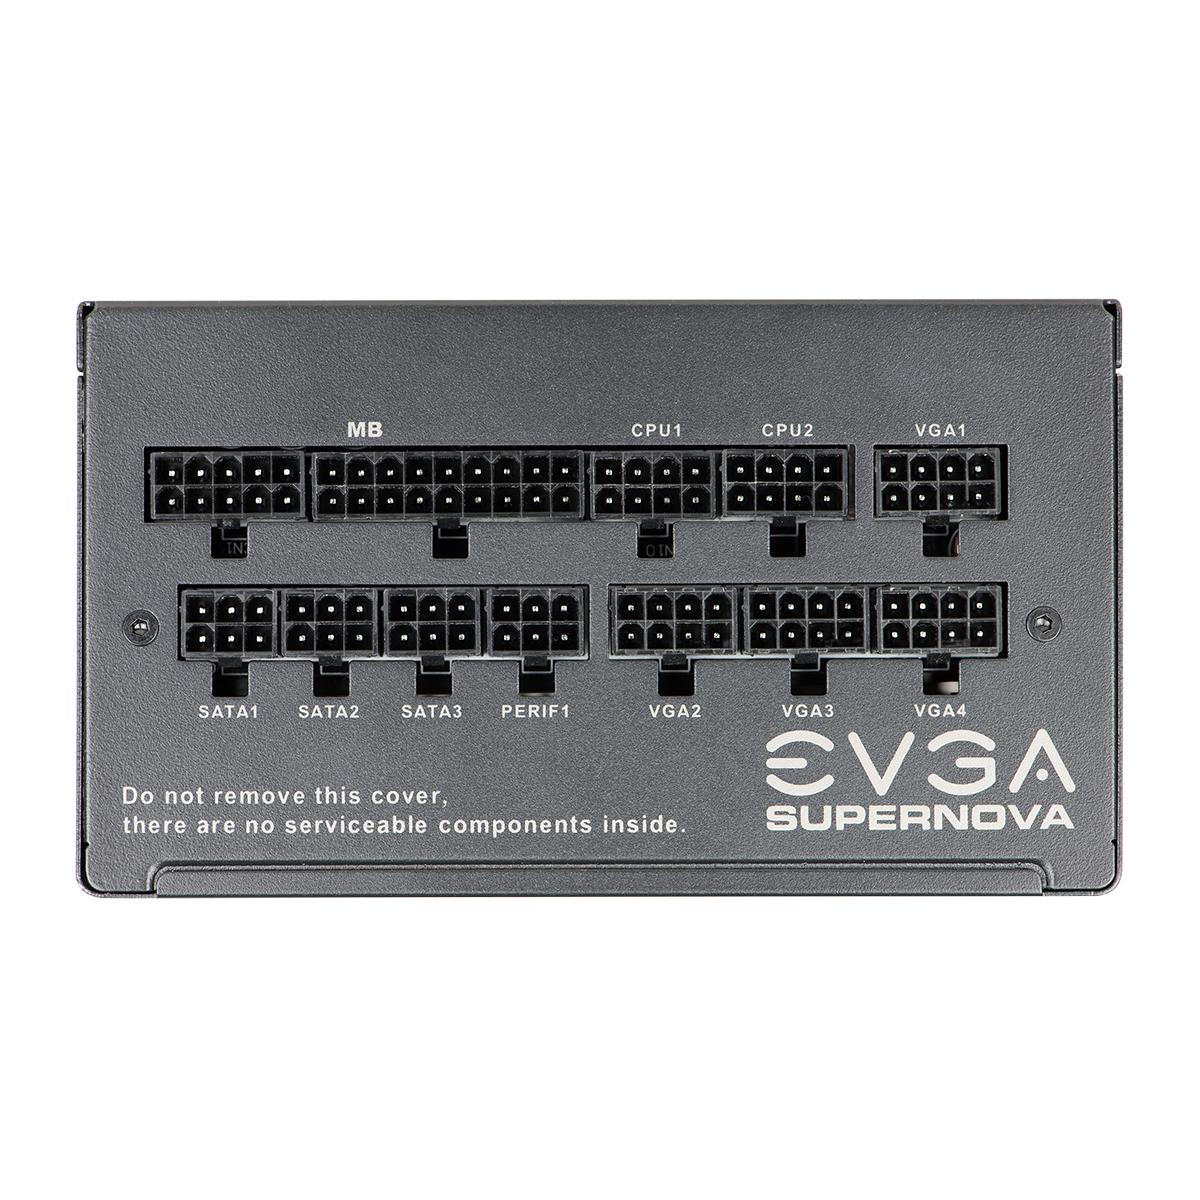 Nguồn máy tính EVGA SuperNOVA 750 G3 750W 80+ Gold ATX slide image 1